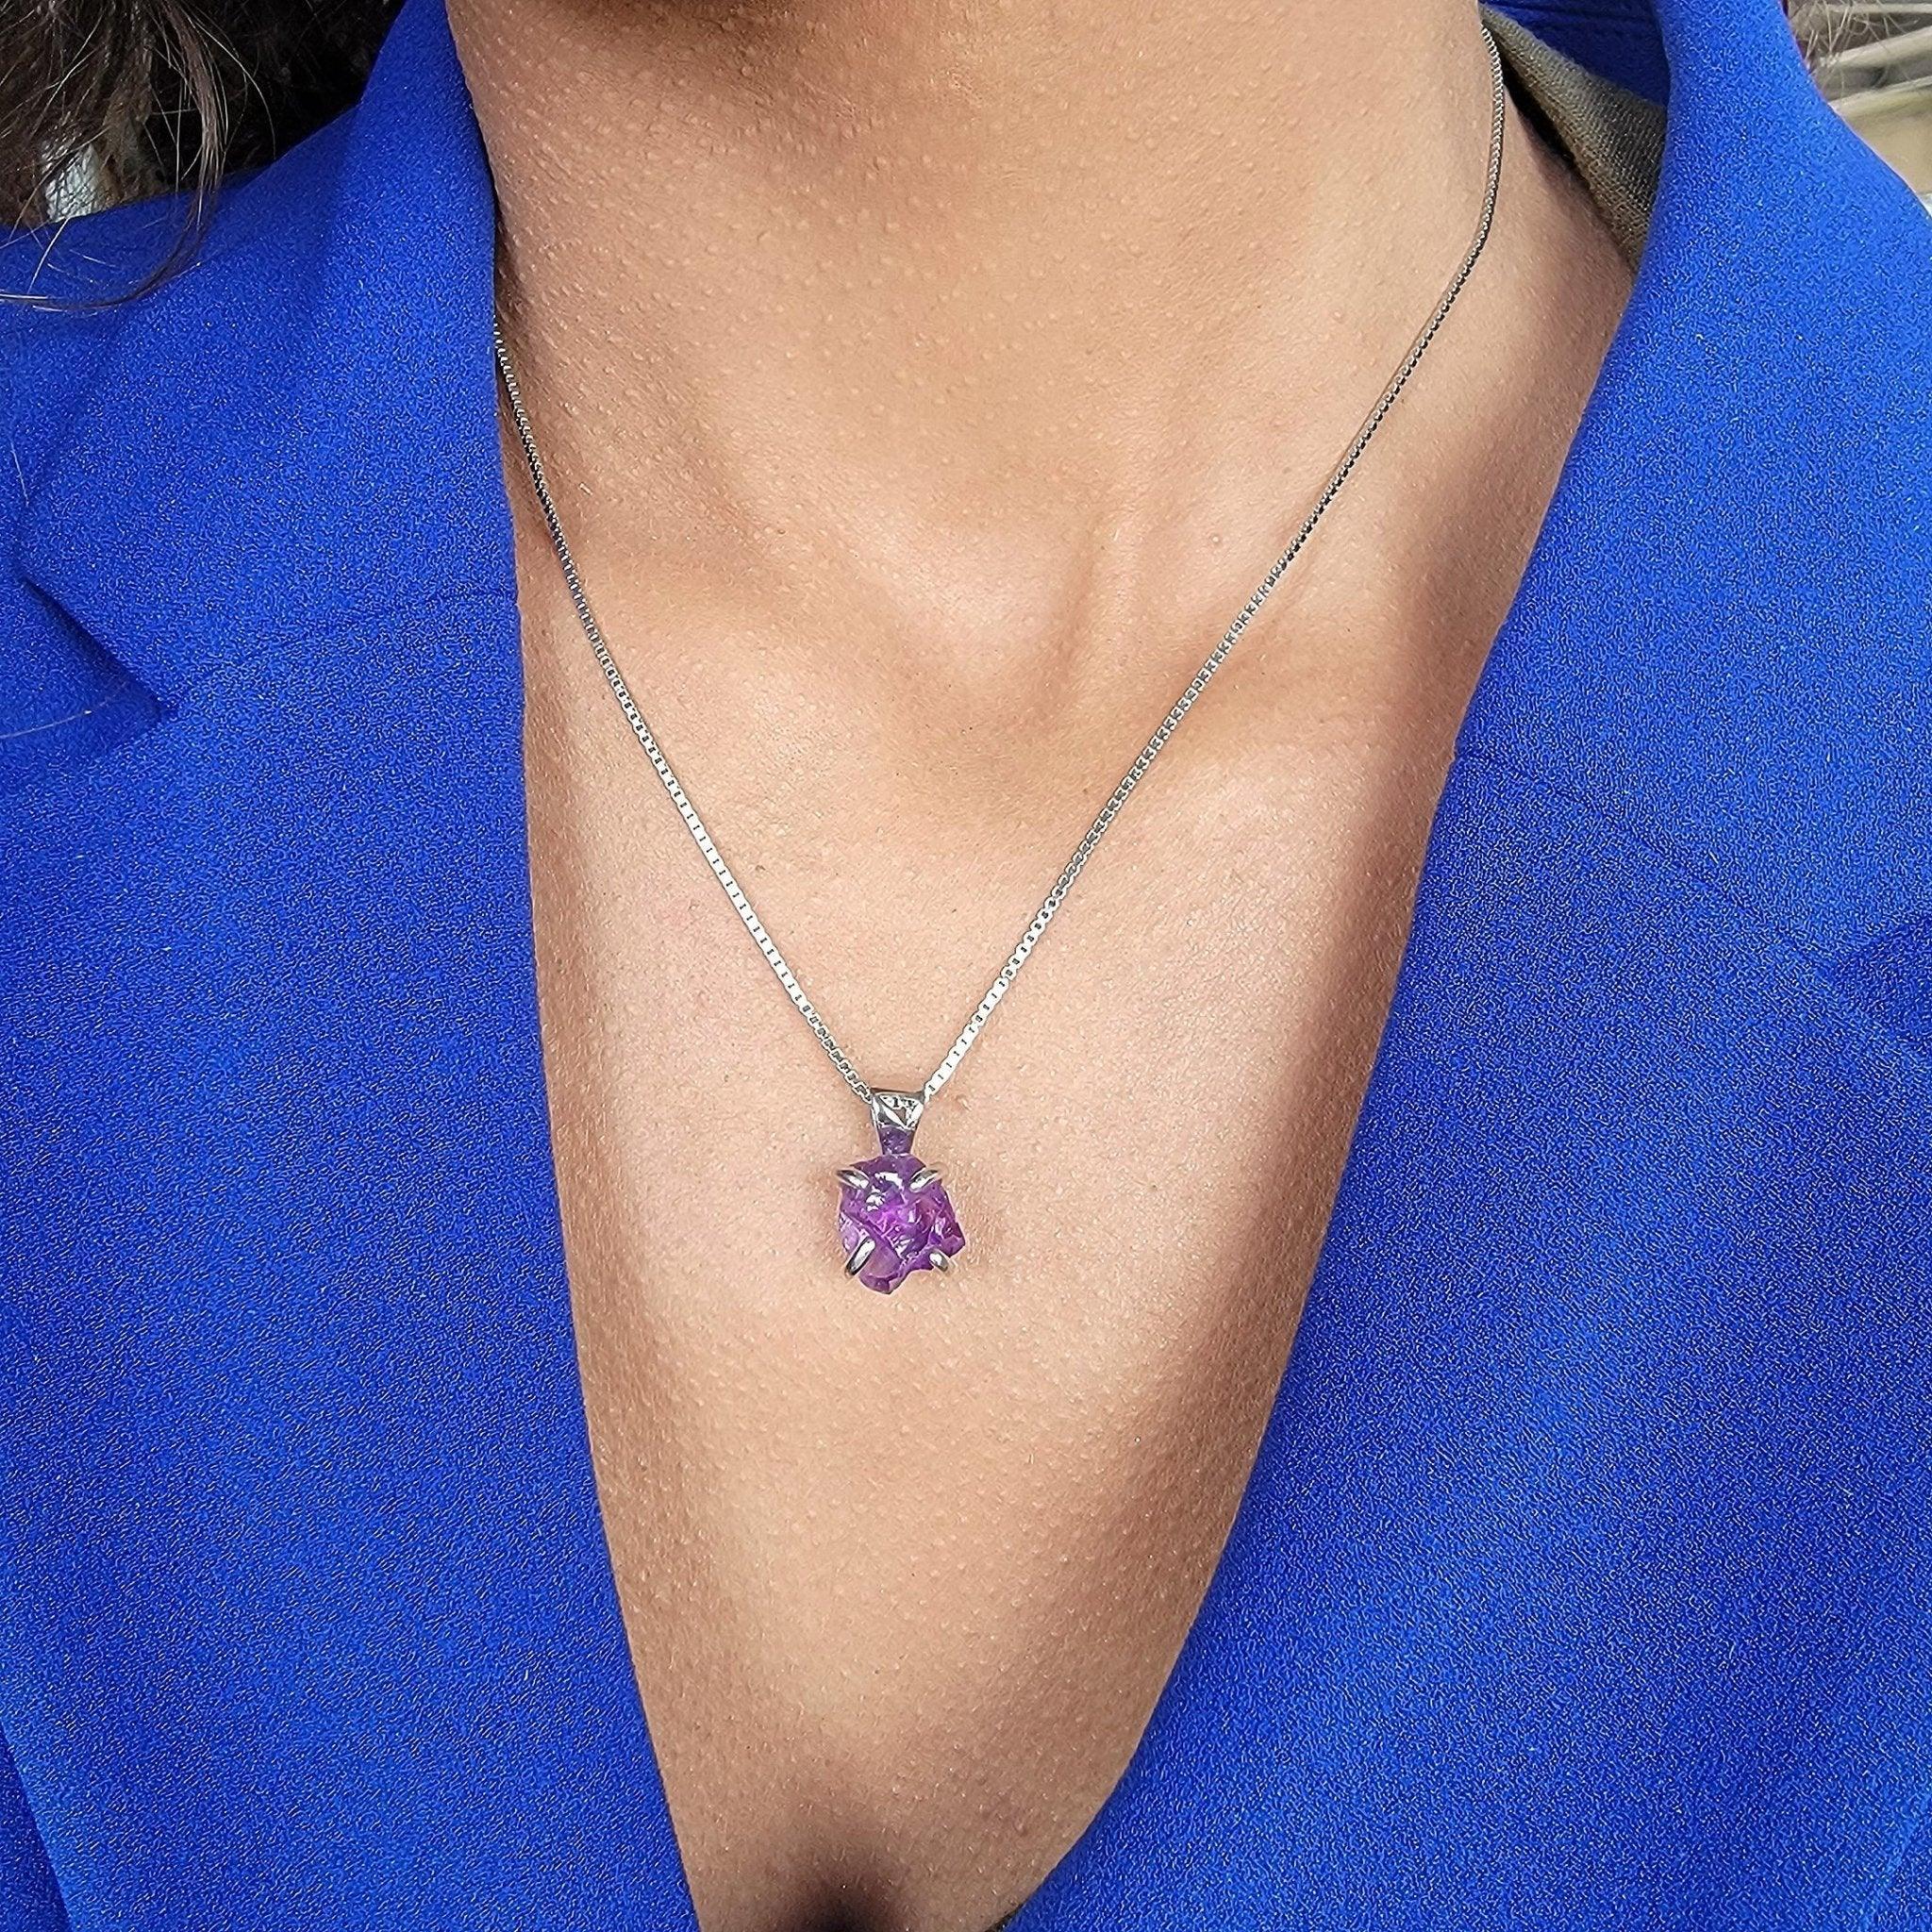 Raw Amethyst Crystal Pendant Necklace - Uniquelan Jewelry